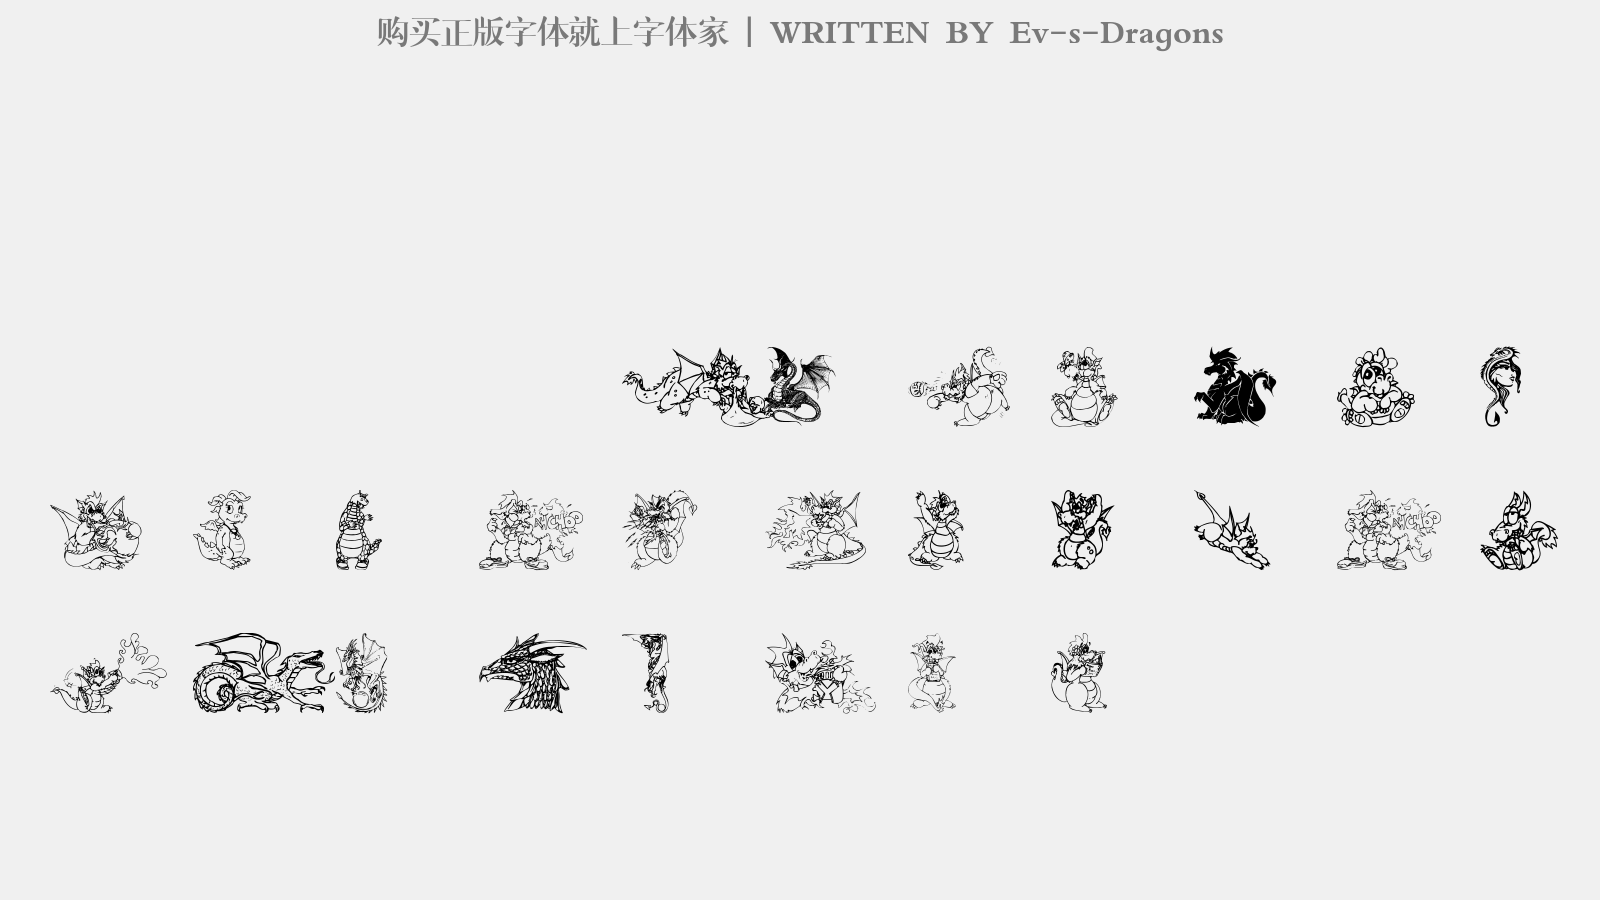 Ev-s-Dragons - 大写字母/小写字母/数字